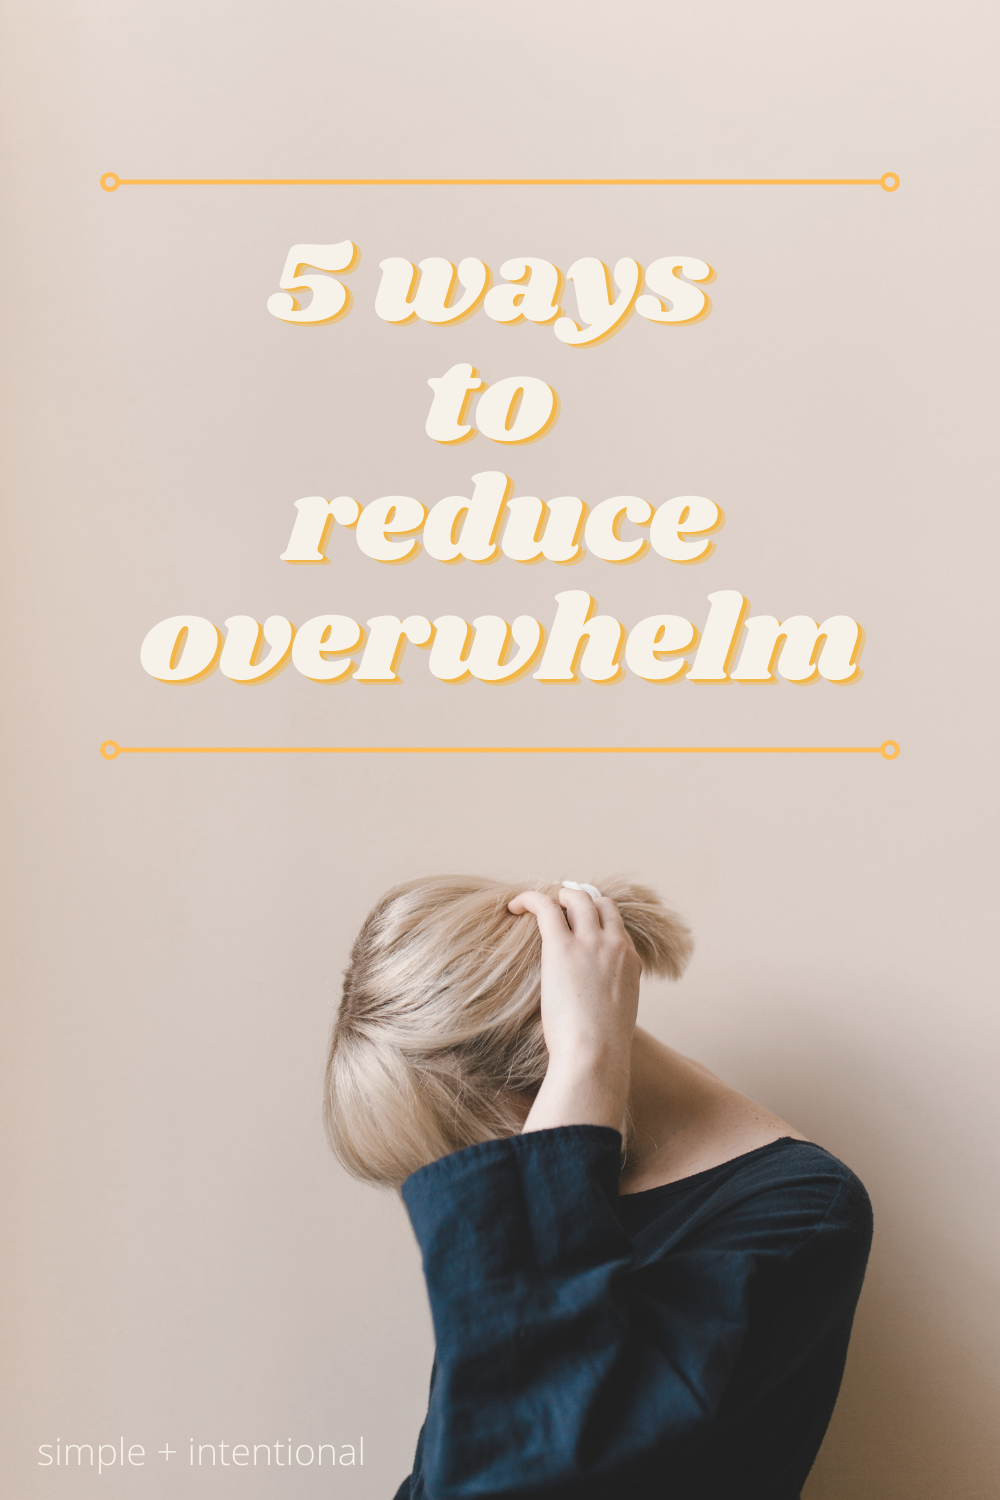 5 ways to reduce overwhelm